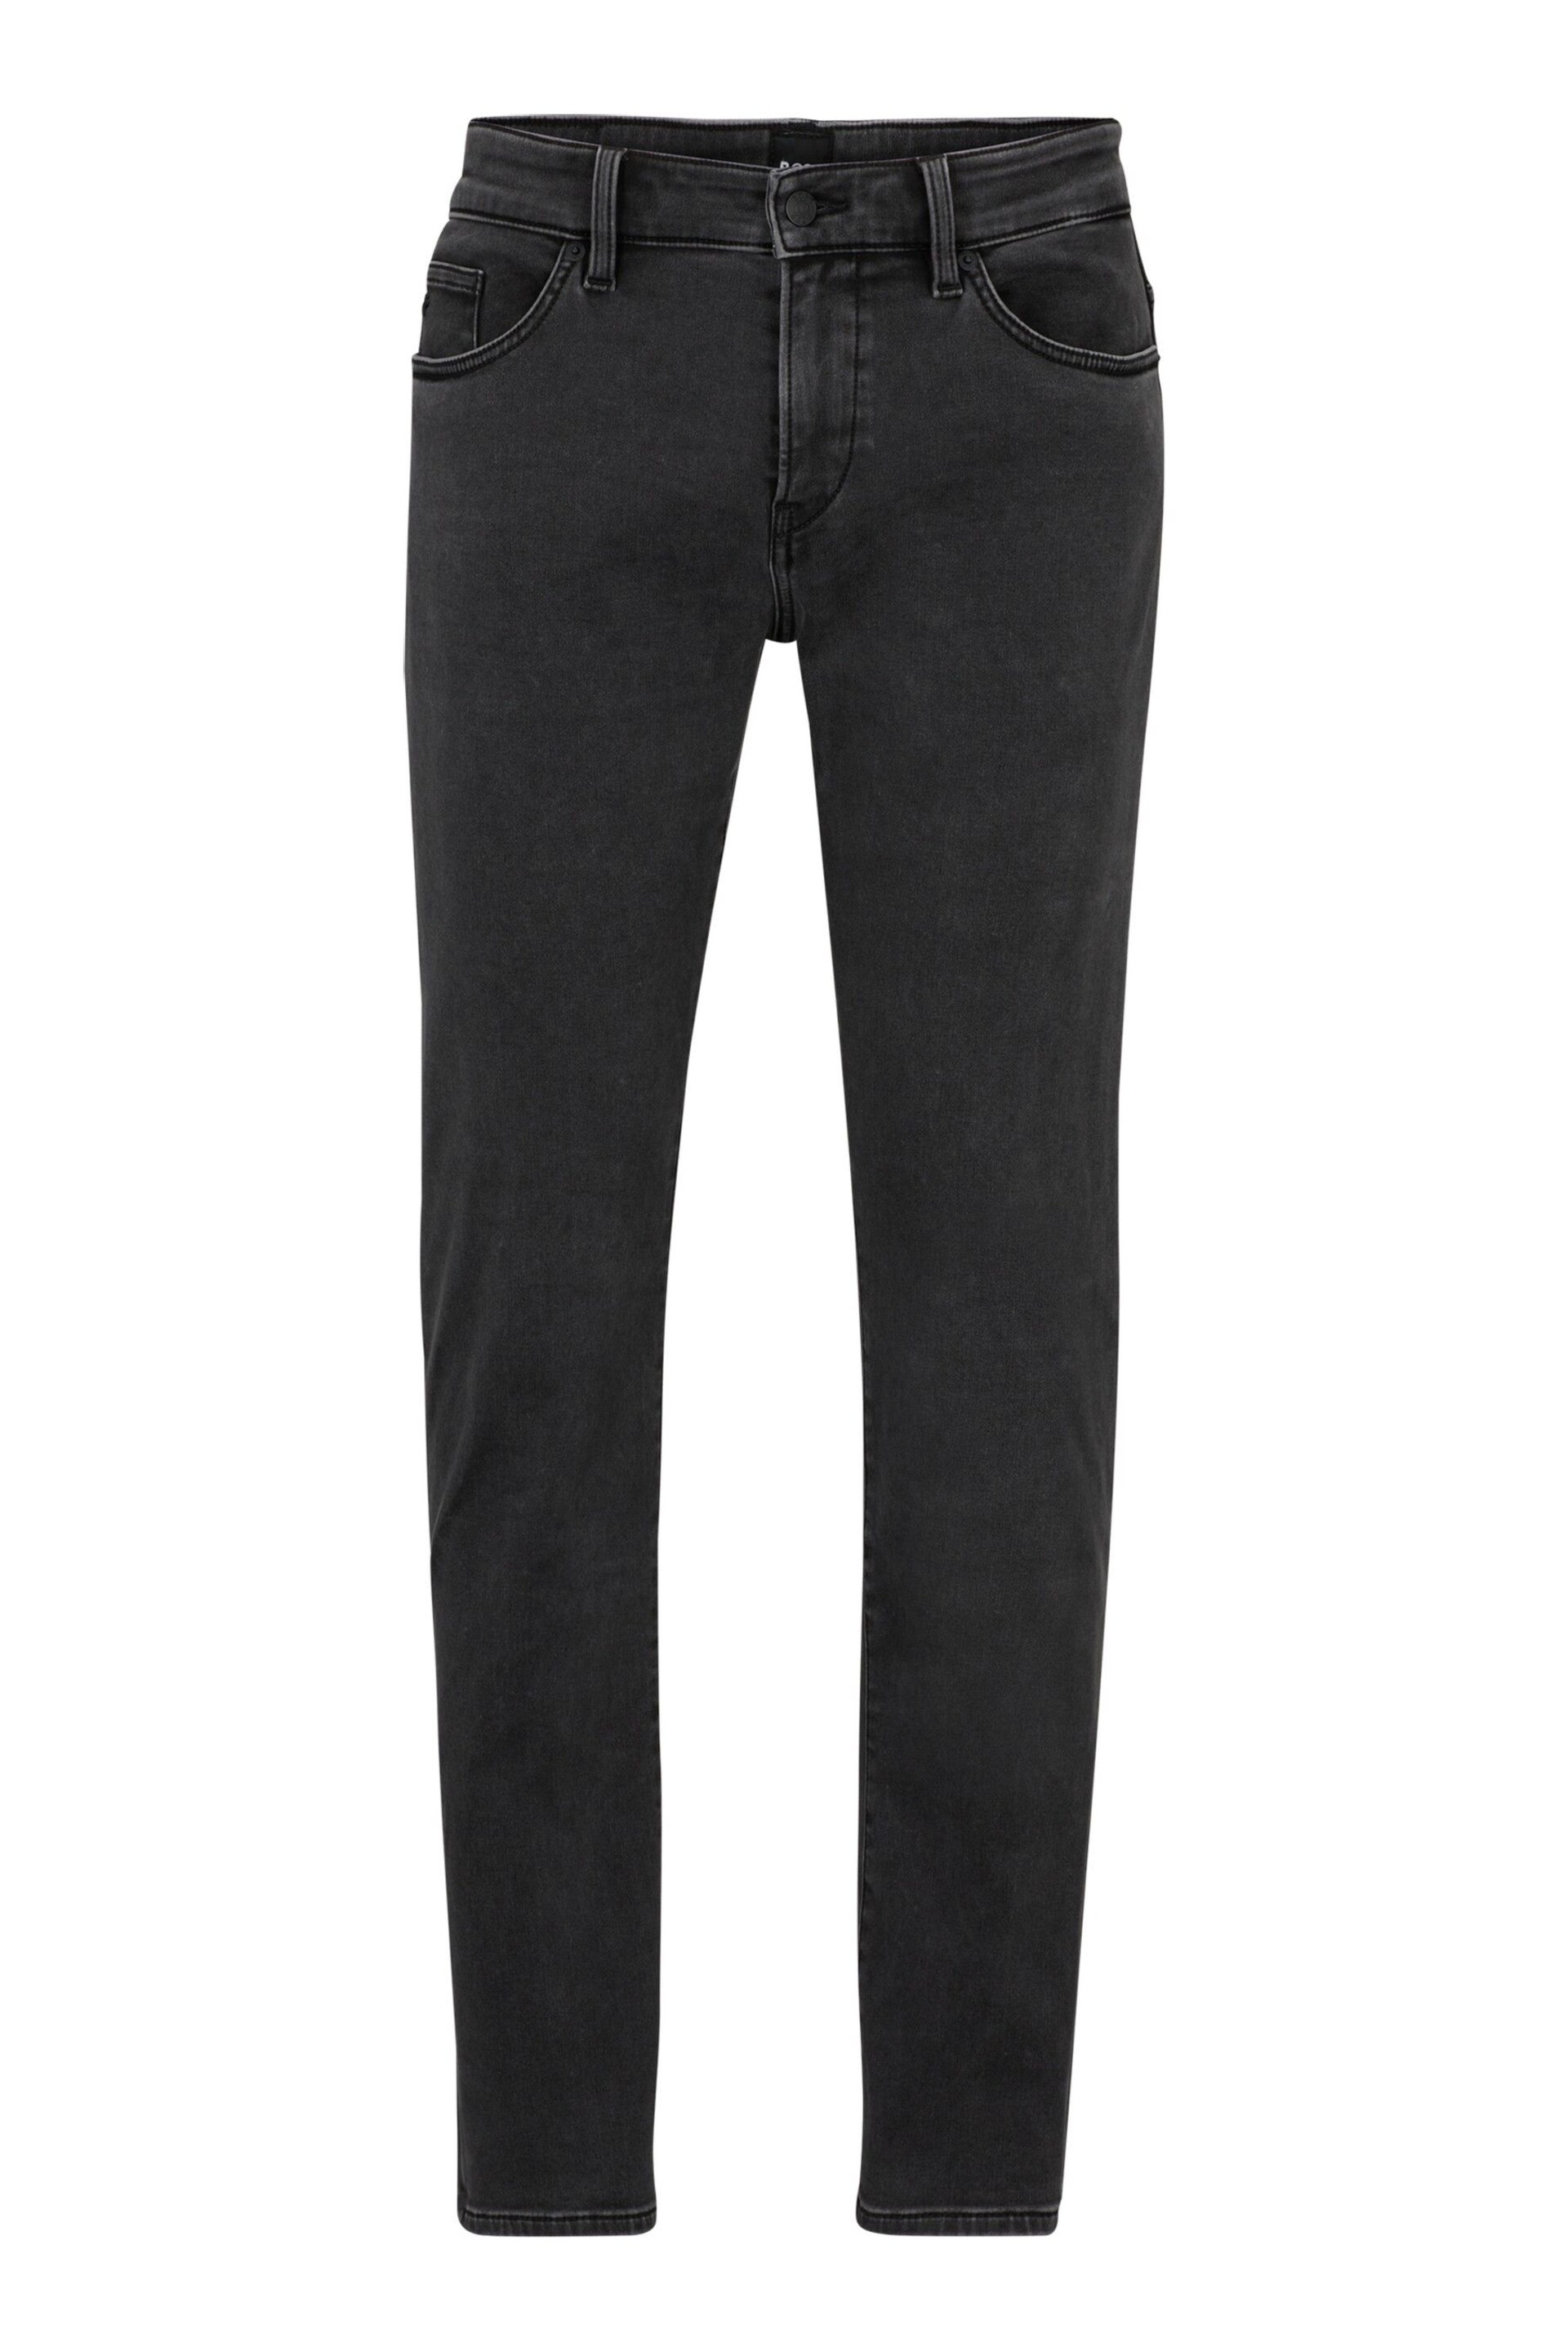 BOSS Dark Grey Delaware Slim Fit Jeans - Image 5 of 5